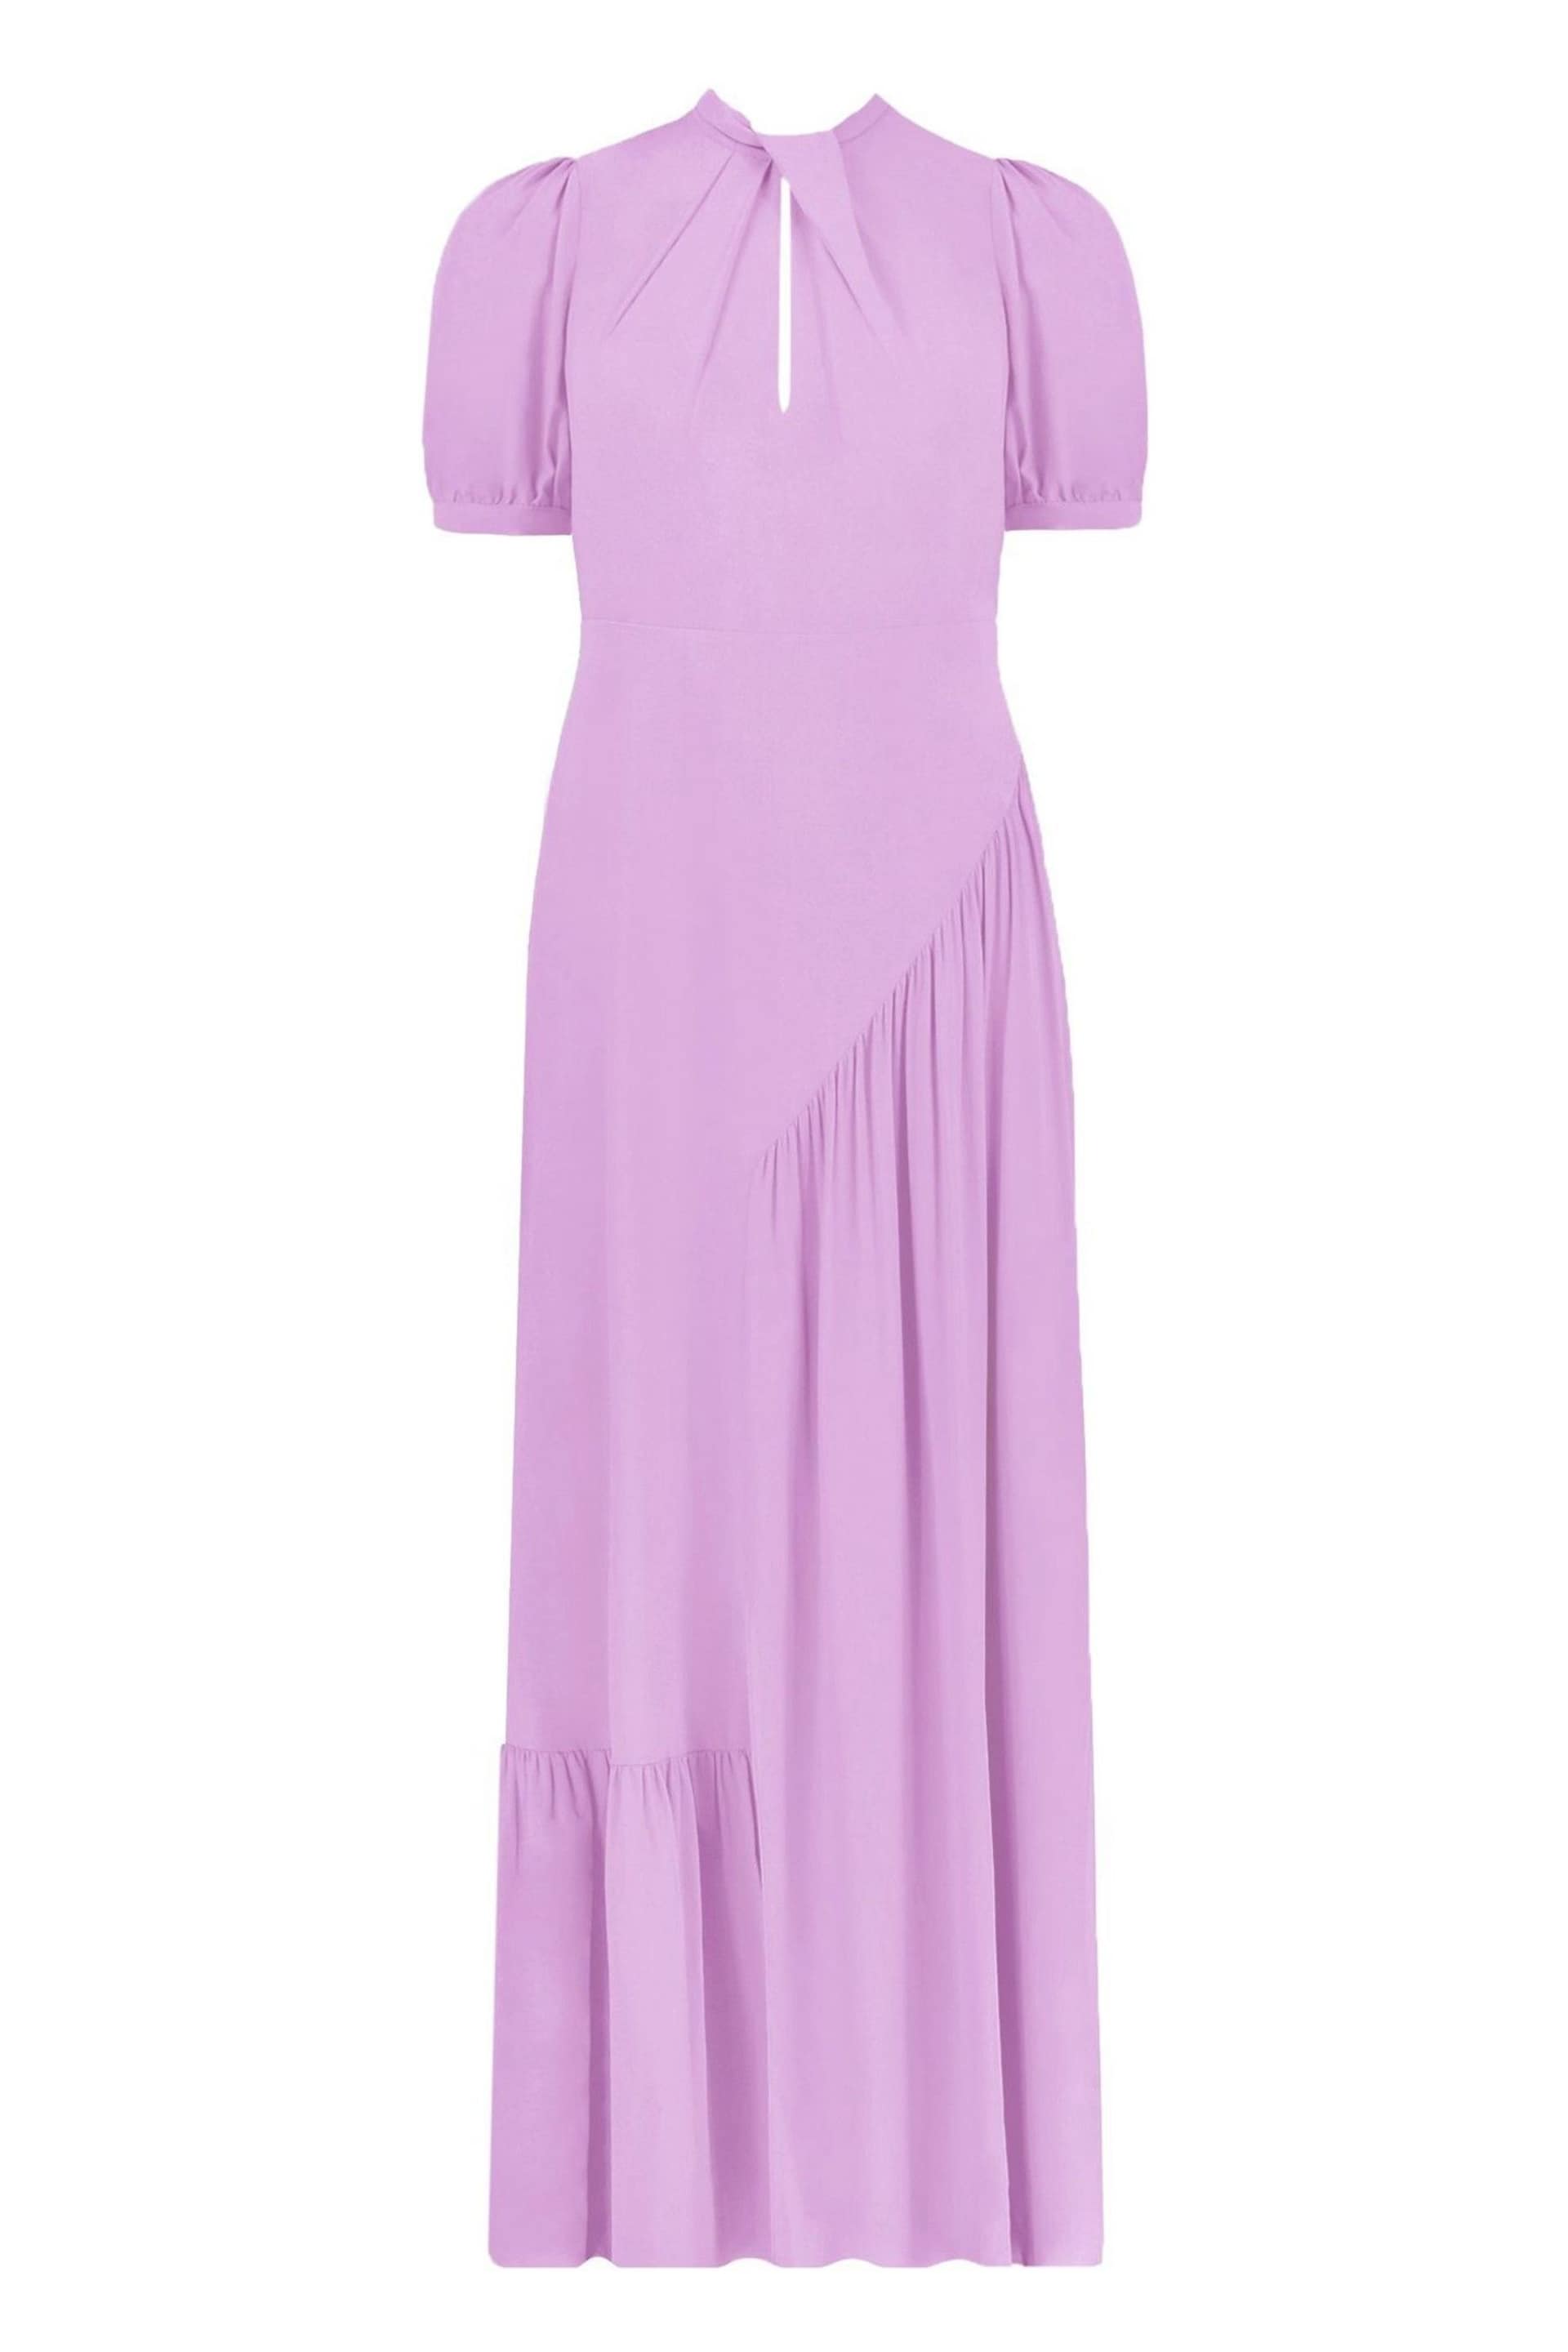 Ro&Zo Purple Scarlett Lilac Keyhole Front Maxi Dress - Image 7 of 7